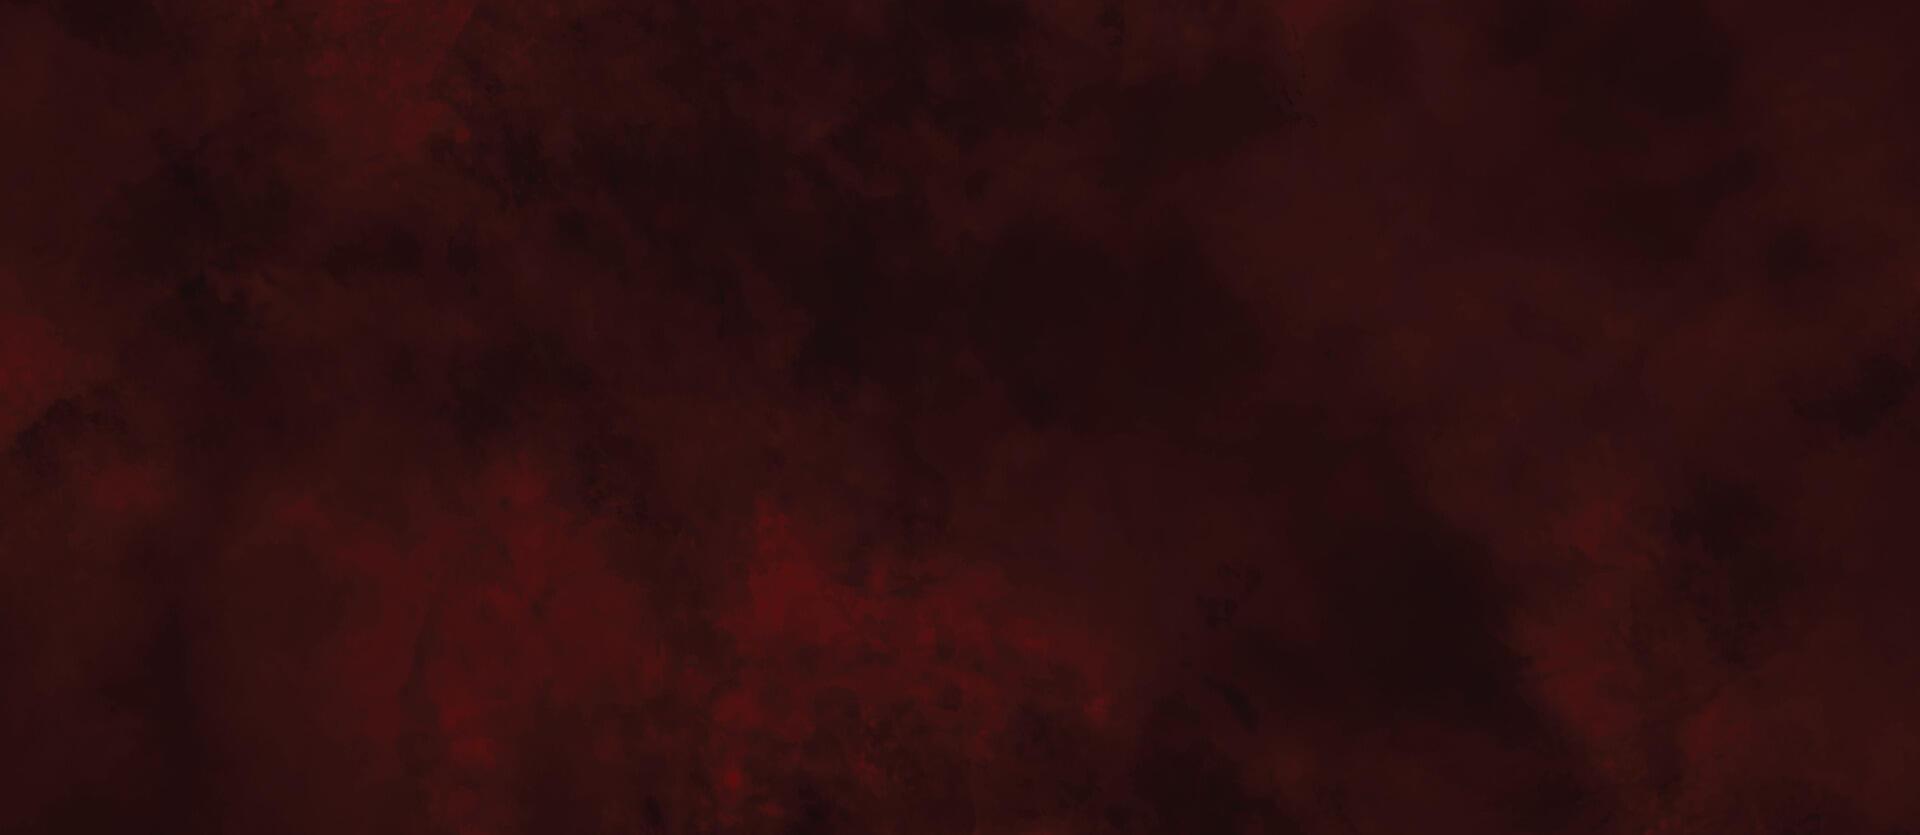 rojo y negro grunge antecedentes. oscuro rojo antecedentes con textura. resumen rojo acuarela antecedentes. vector